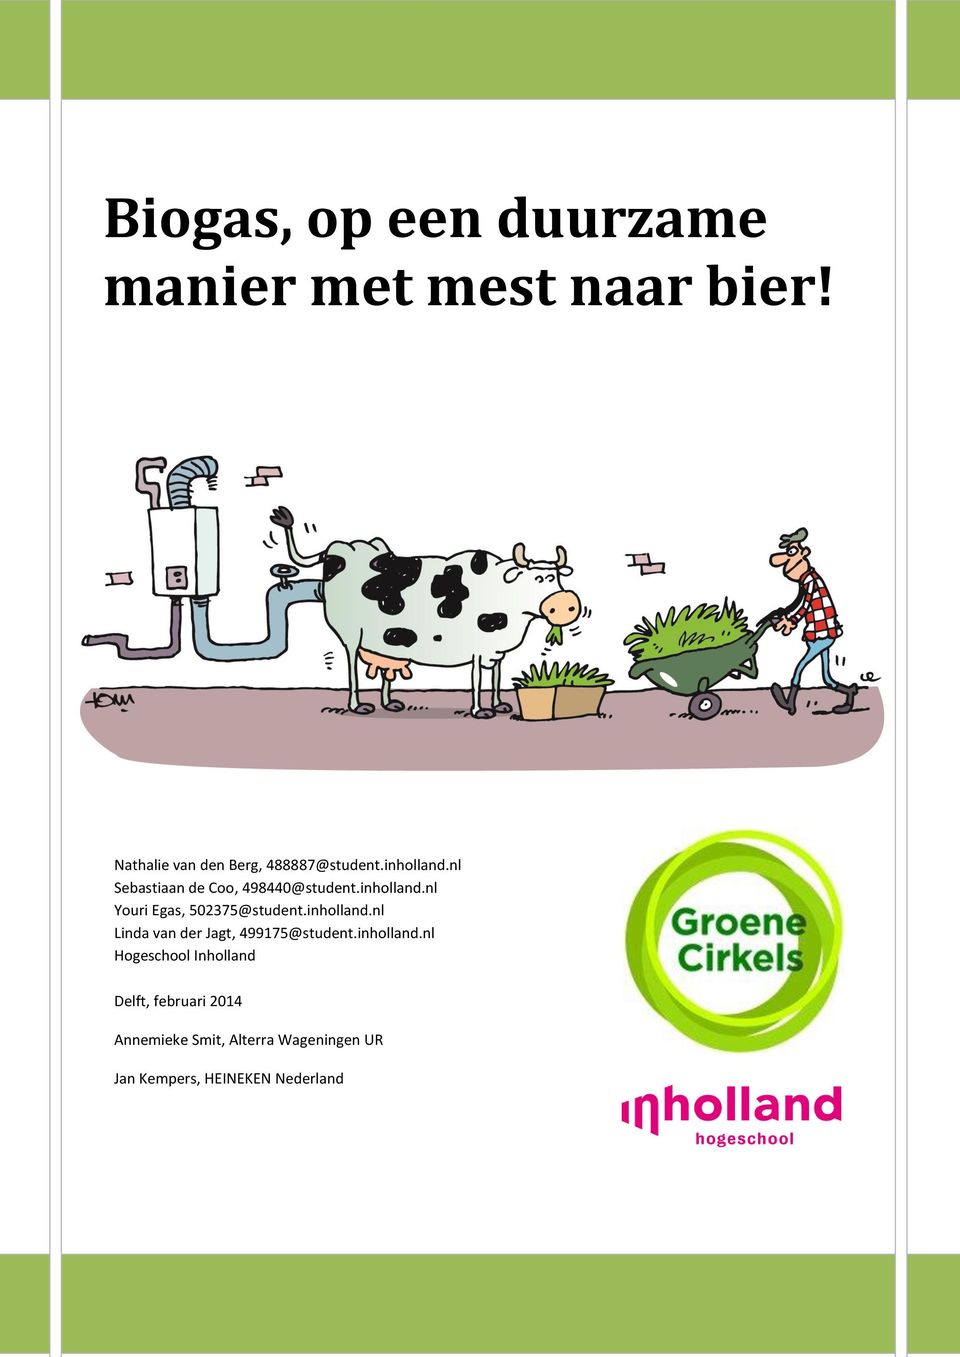 inholland.nl Youri Egas, 502375@student.inholland.nl Linda van der Jagt, 499175@student.